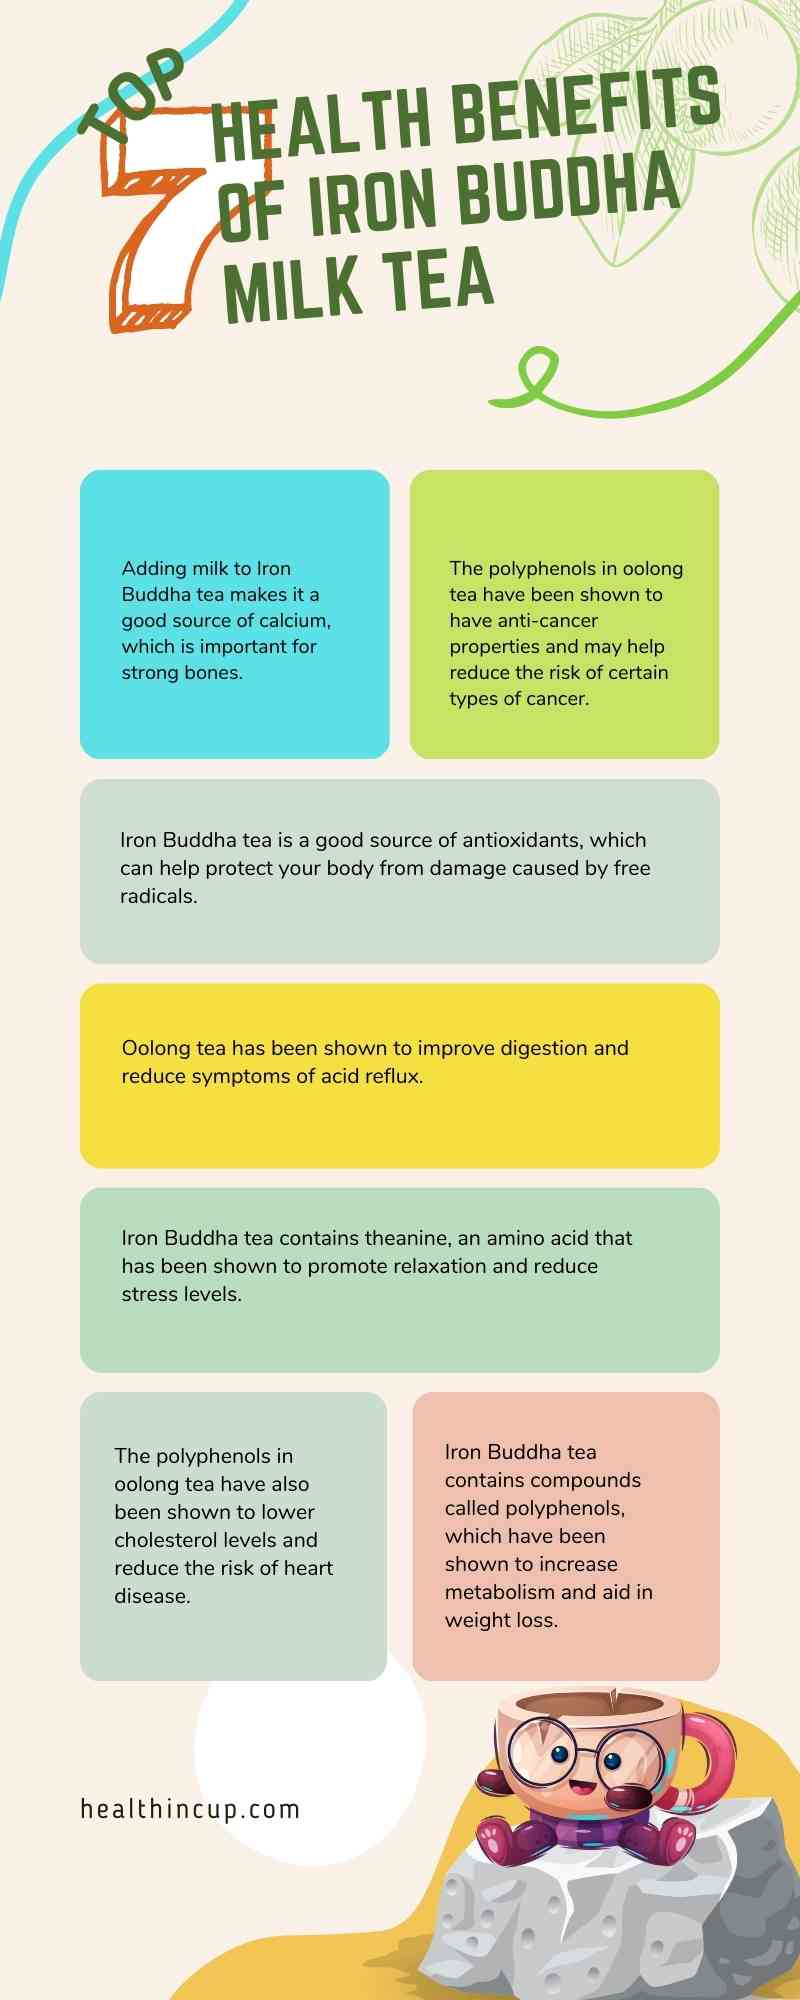 Top 7 Health Benefits of Iron Buddha Milk Tea